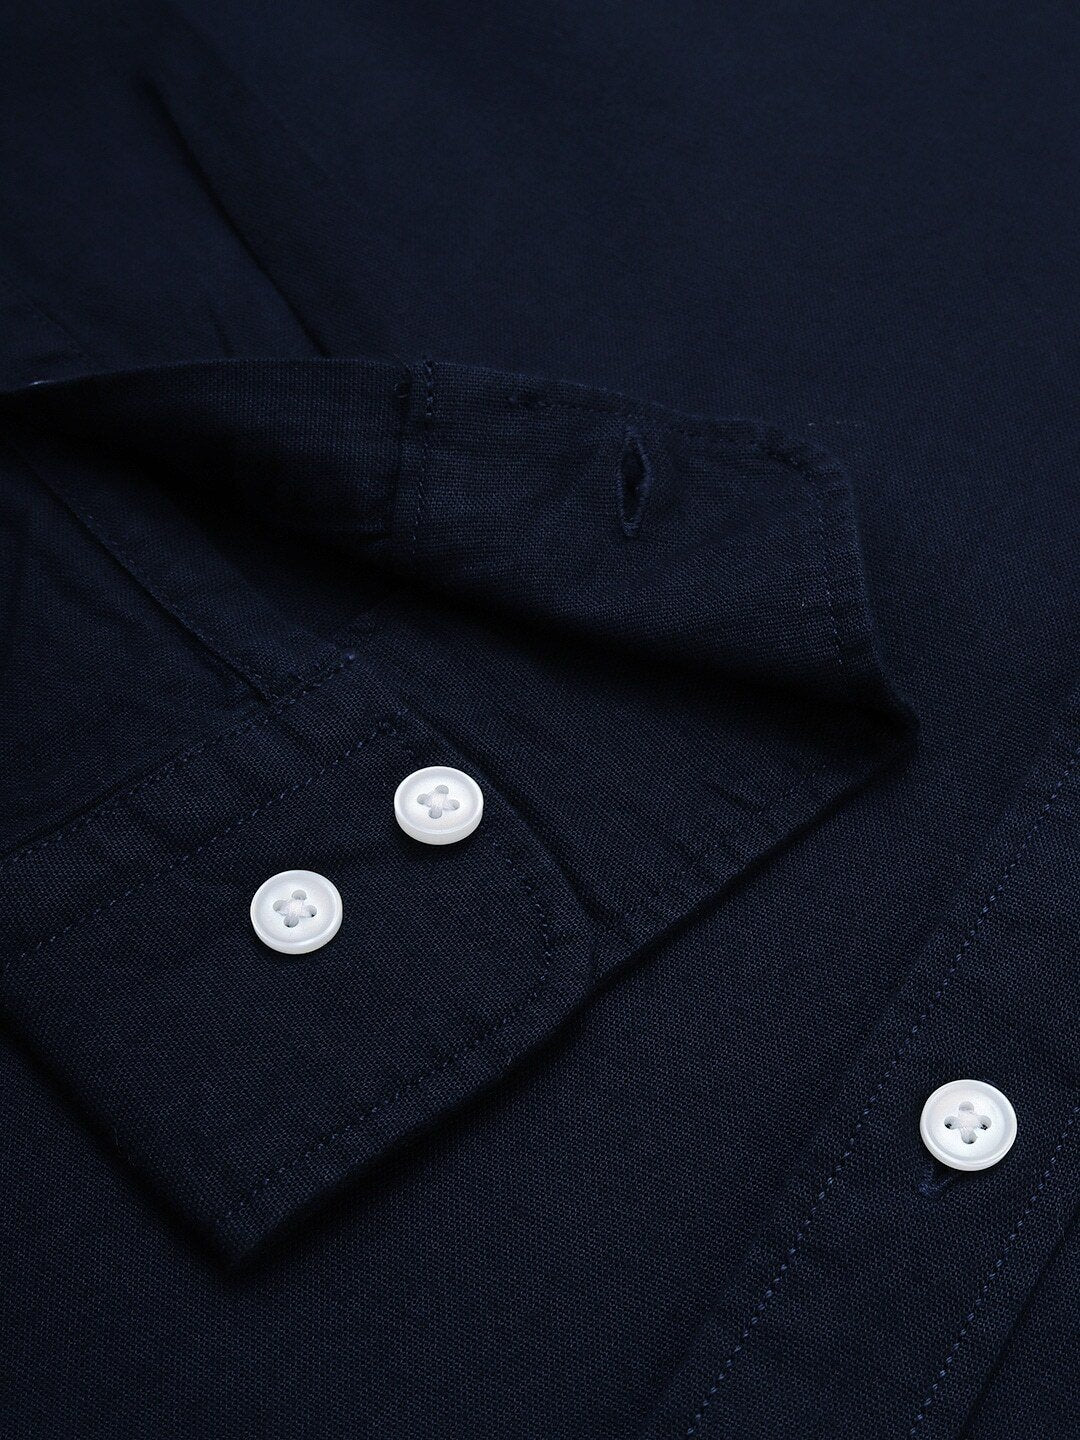 Men Navy Blue Slim Fit Solid Casual Shirt-32907-0093